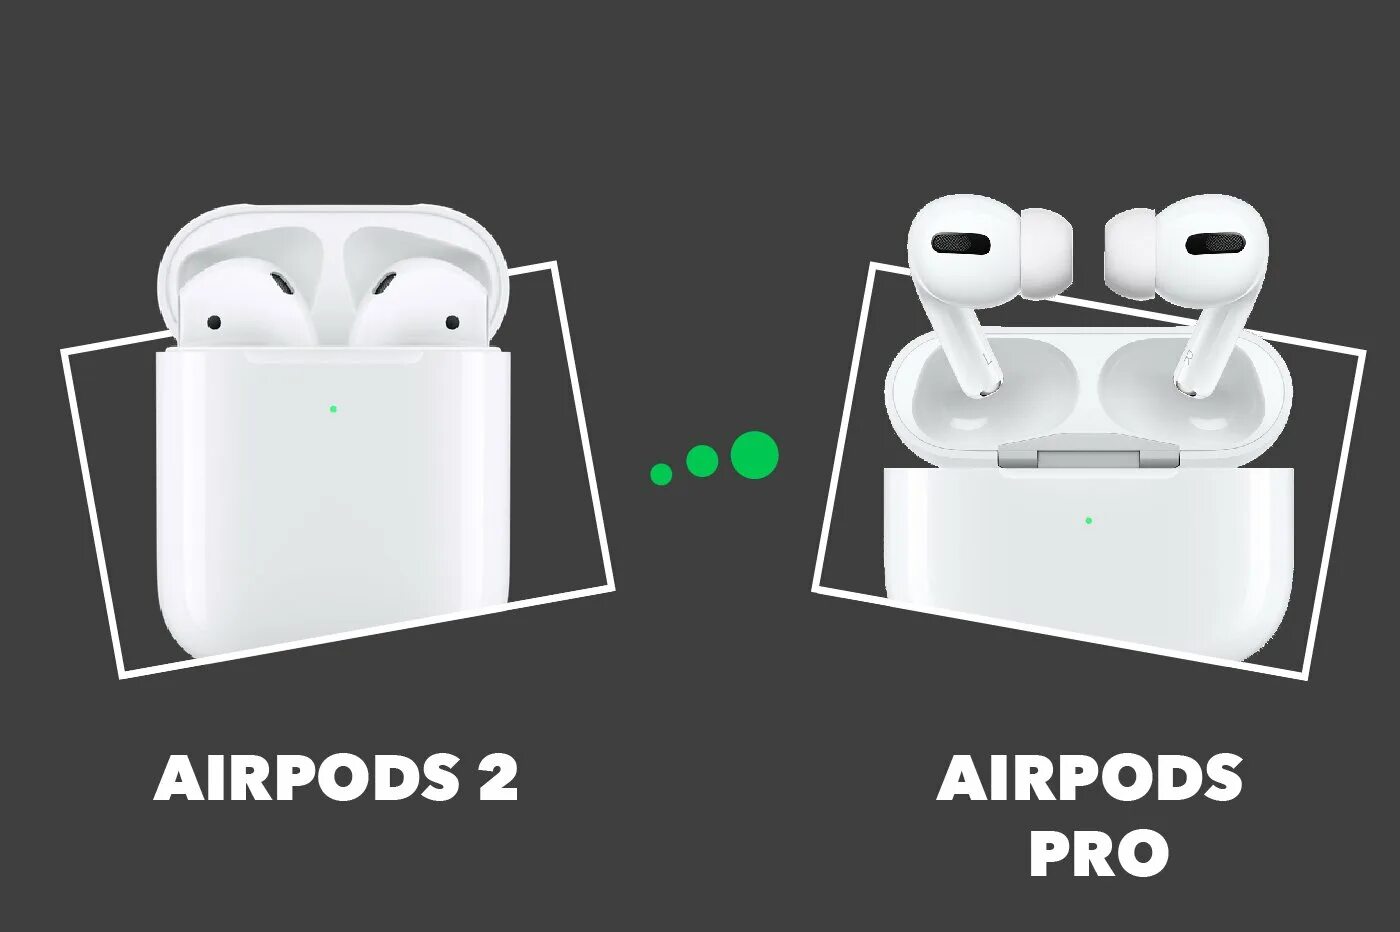 Apple AIRPODS Pro vs pro2. AIRPODS Pro vs Pro 2. AIRPODS Pro 2 vs AIRPODS Pro. Air pods 1 vs Air pods 2. Airpods на русском языке